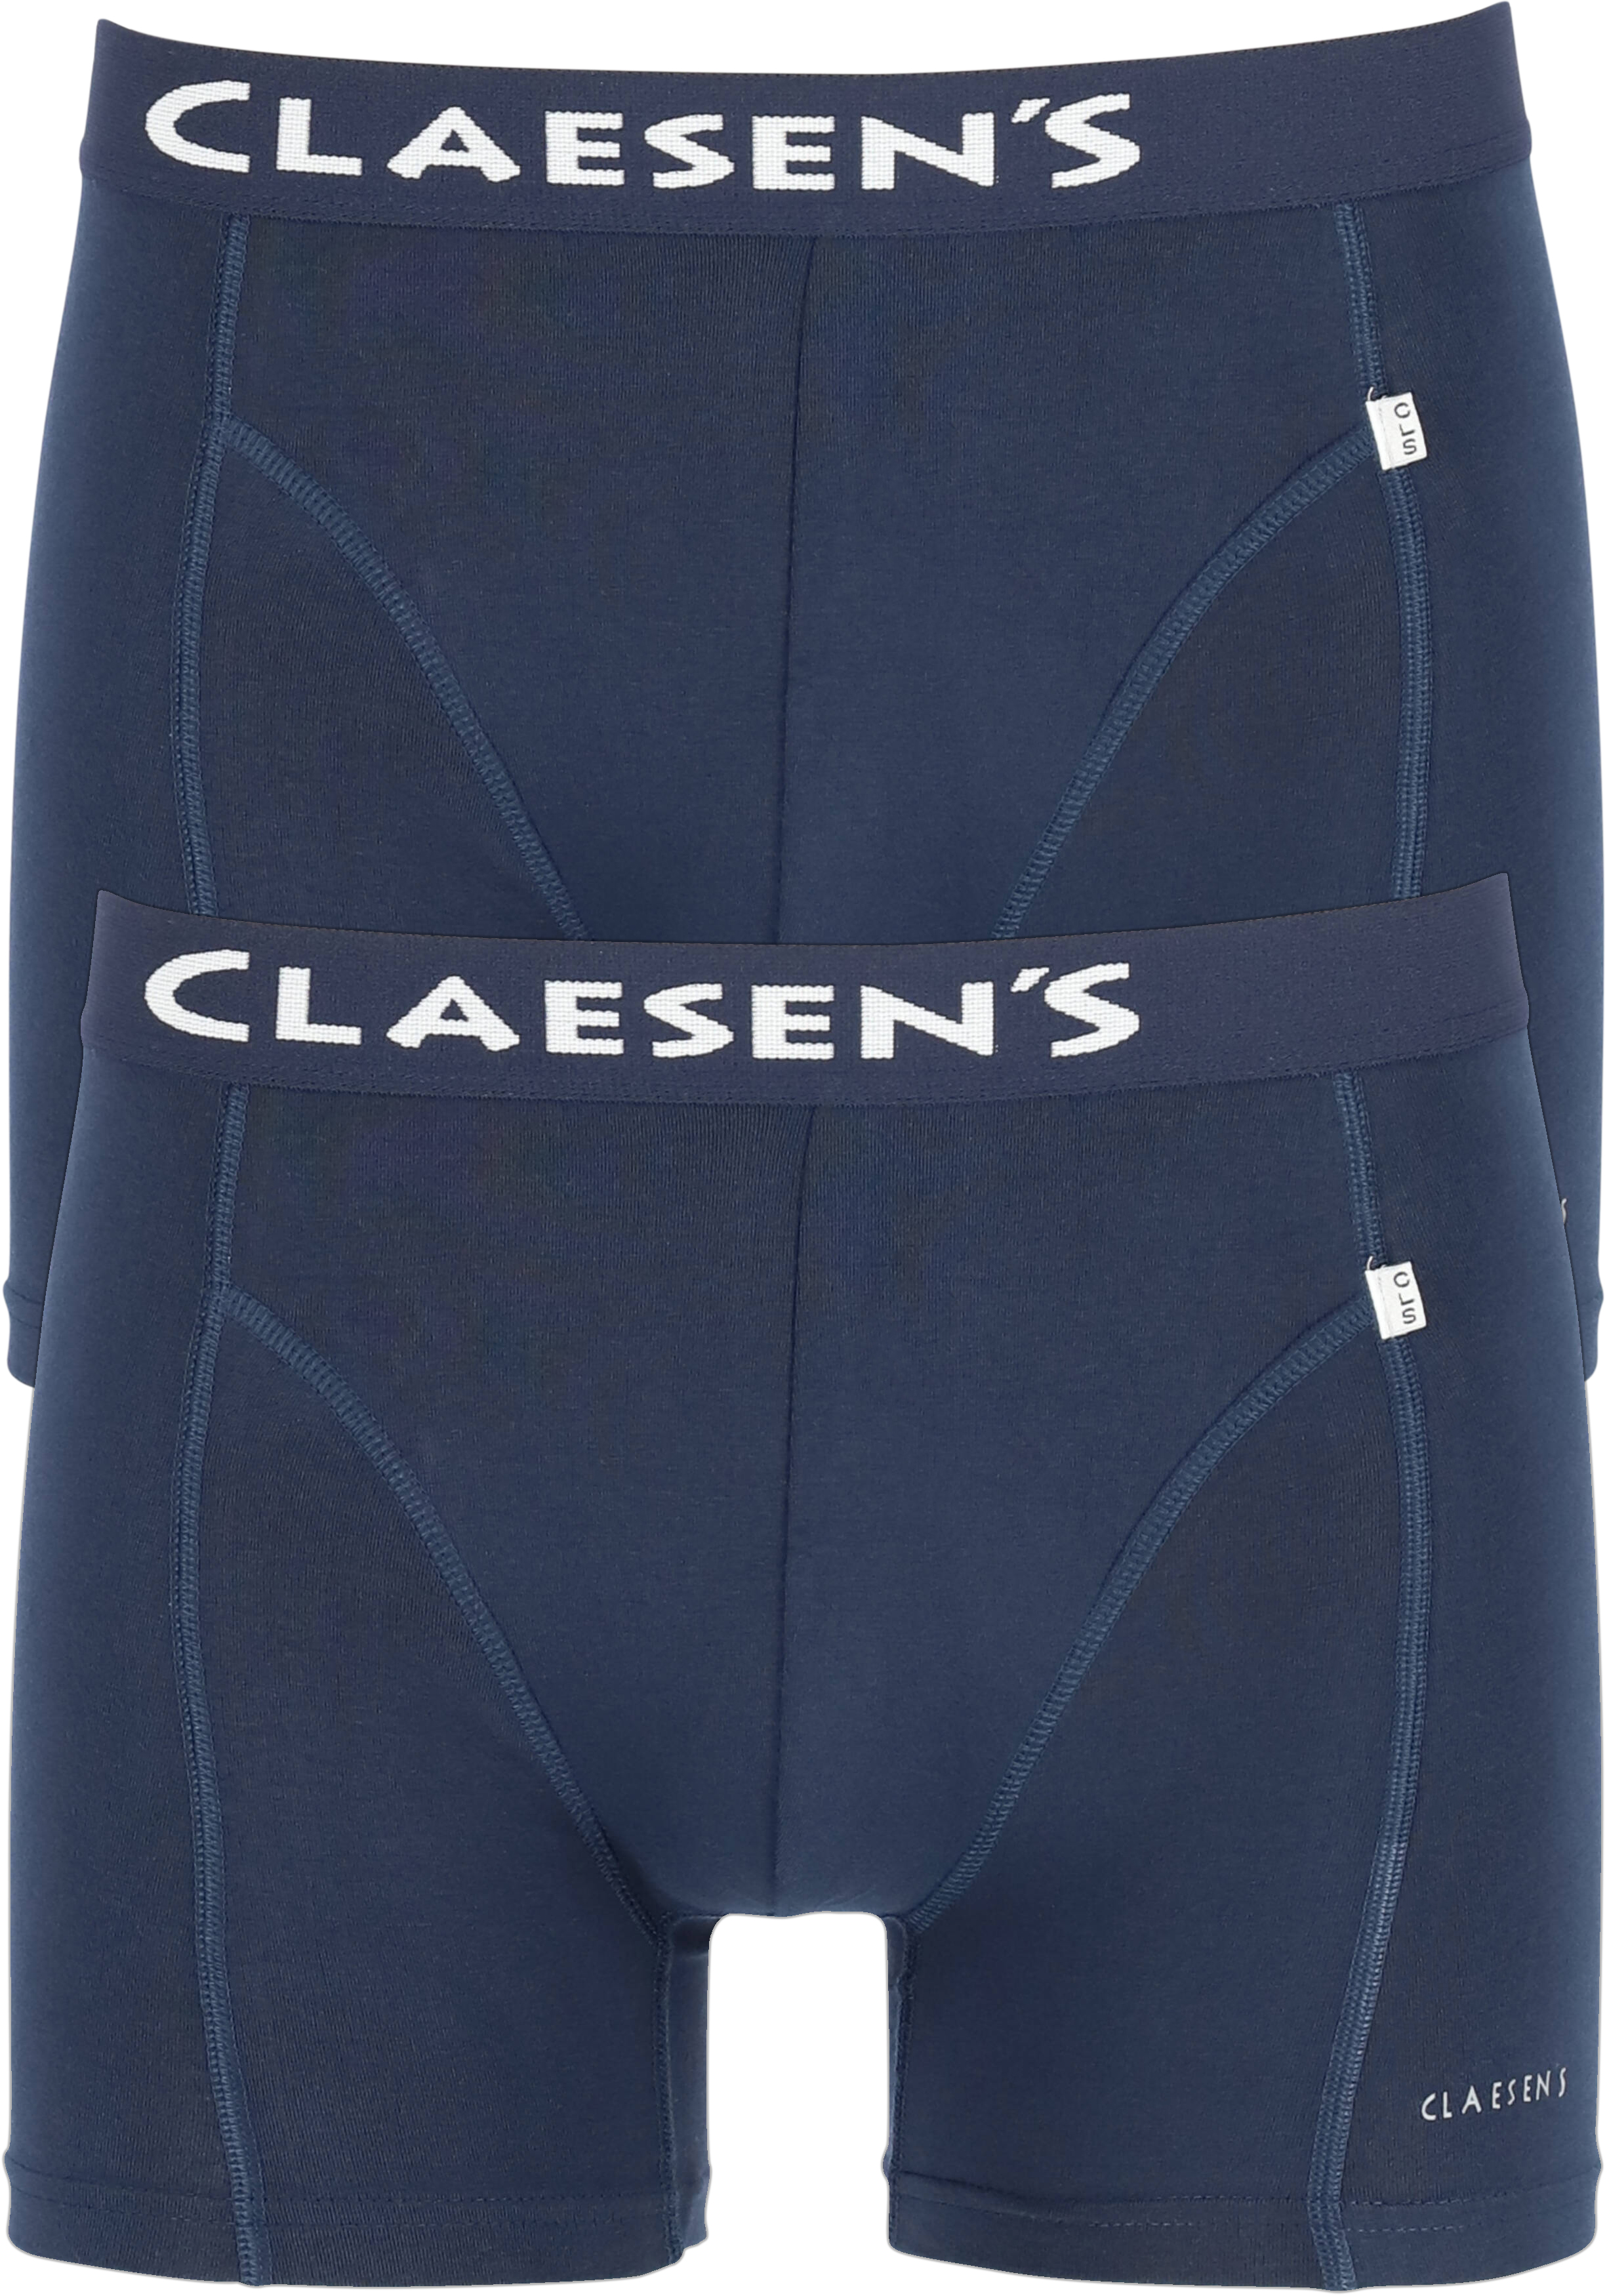 Claesen's Basics boxers (2-pack), heren boxers lang, blauw